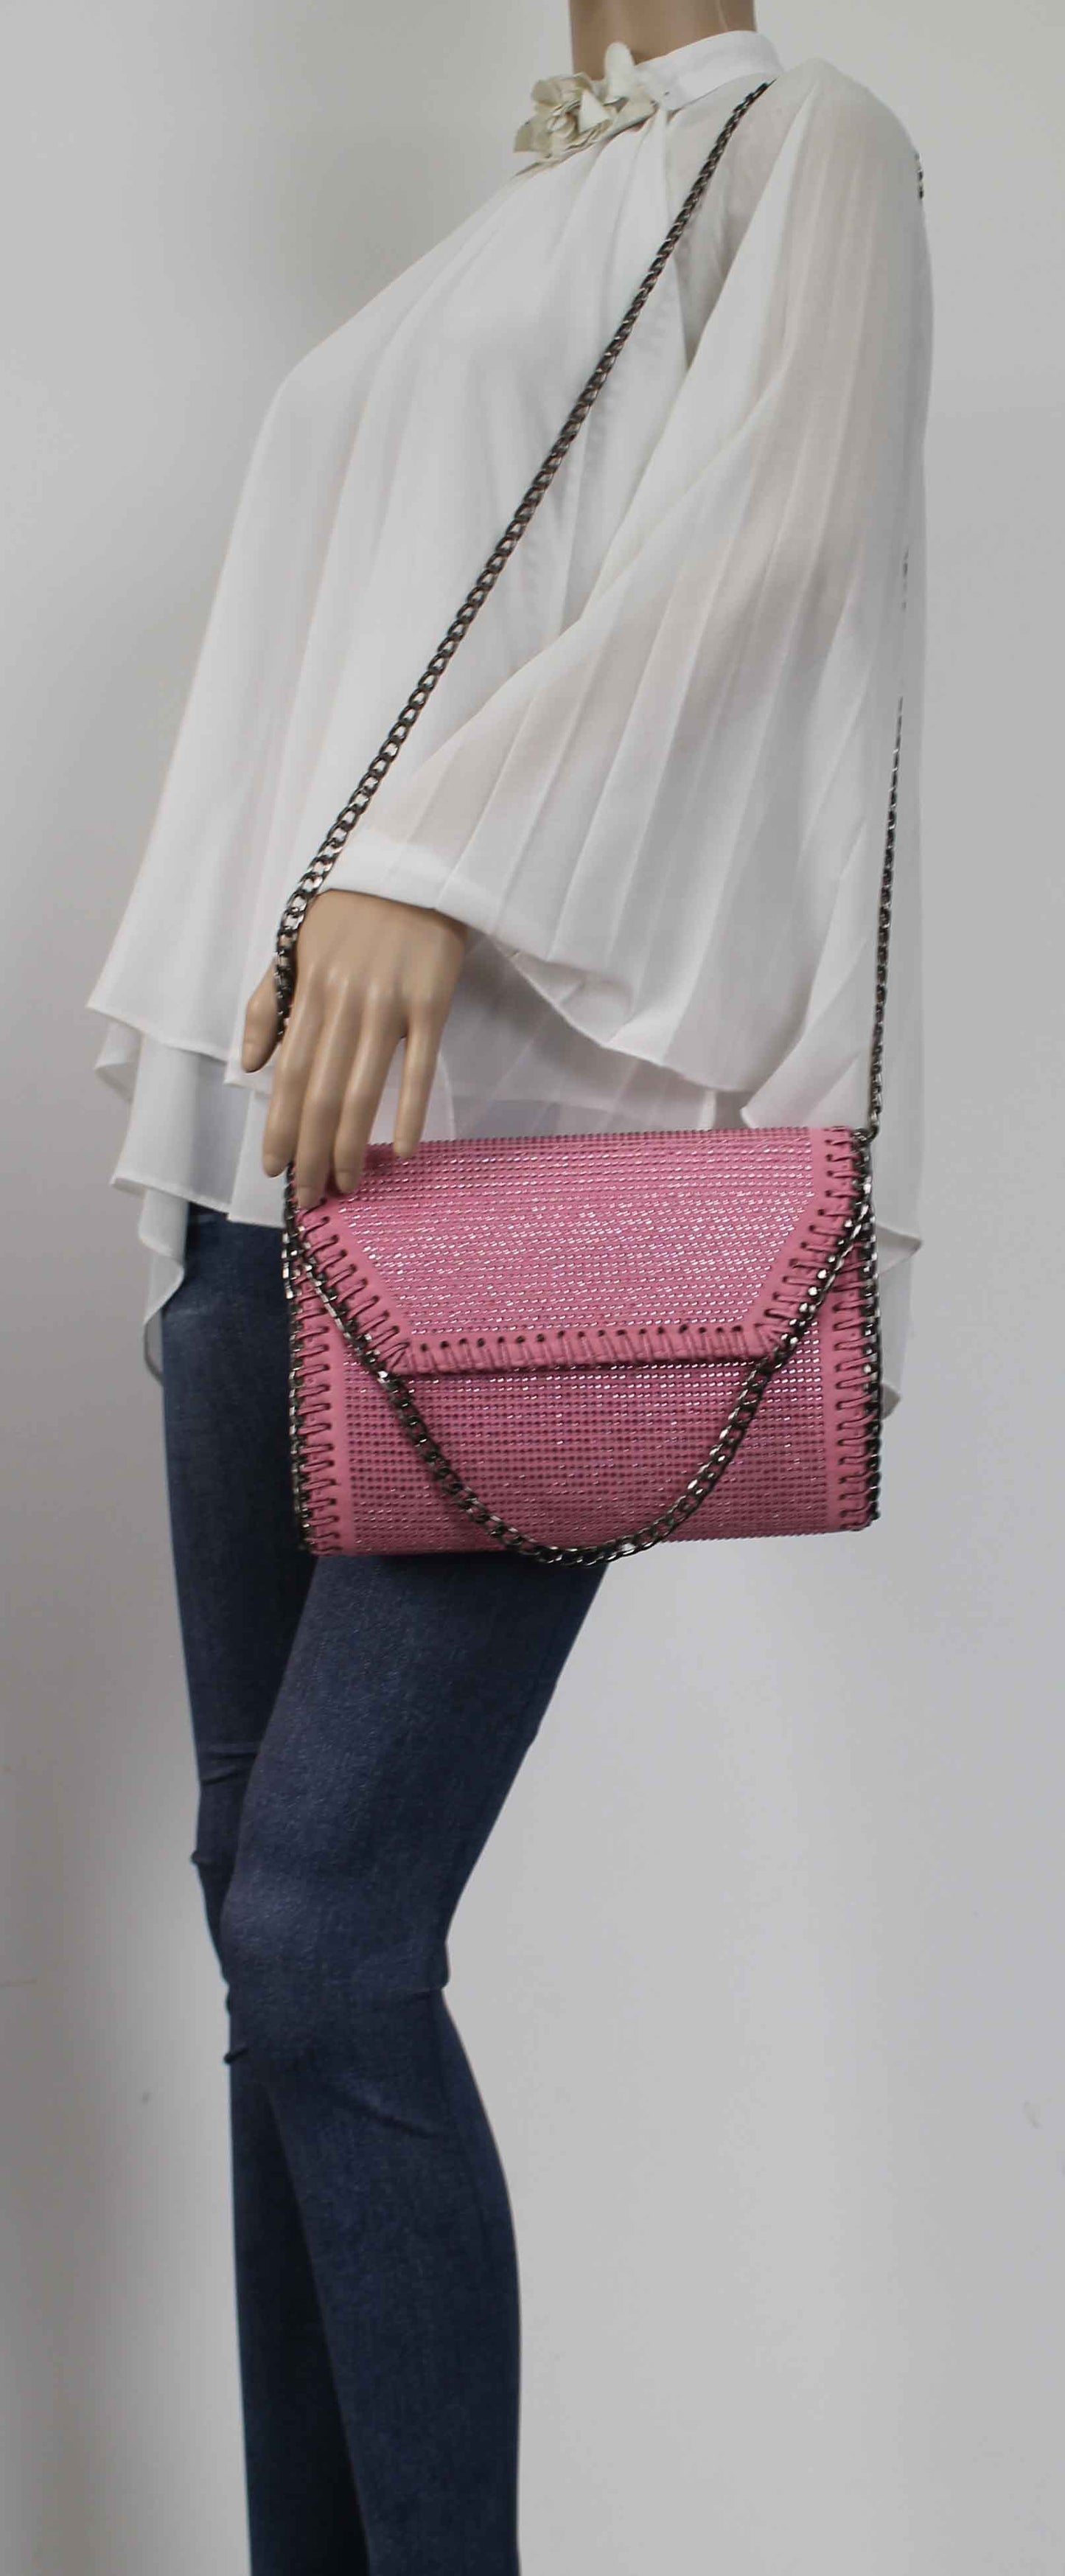 SWANKYSWANS Soi Diamante Clutch Bag Pink Cute Cheap Clutch Bag For Weddings School and Work